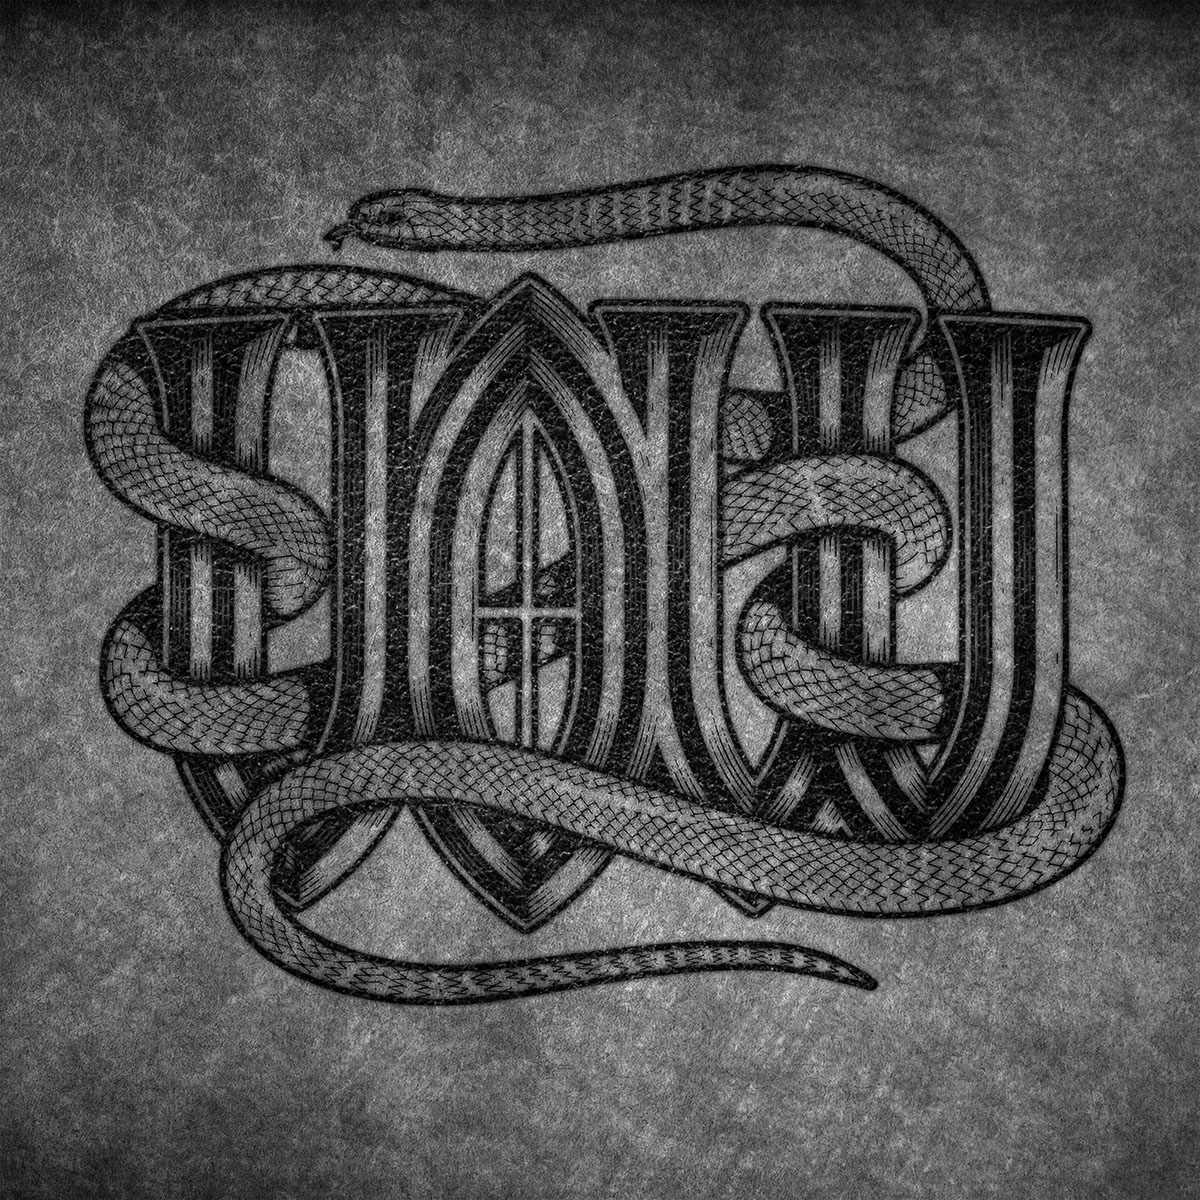 Vow serpent illustration